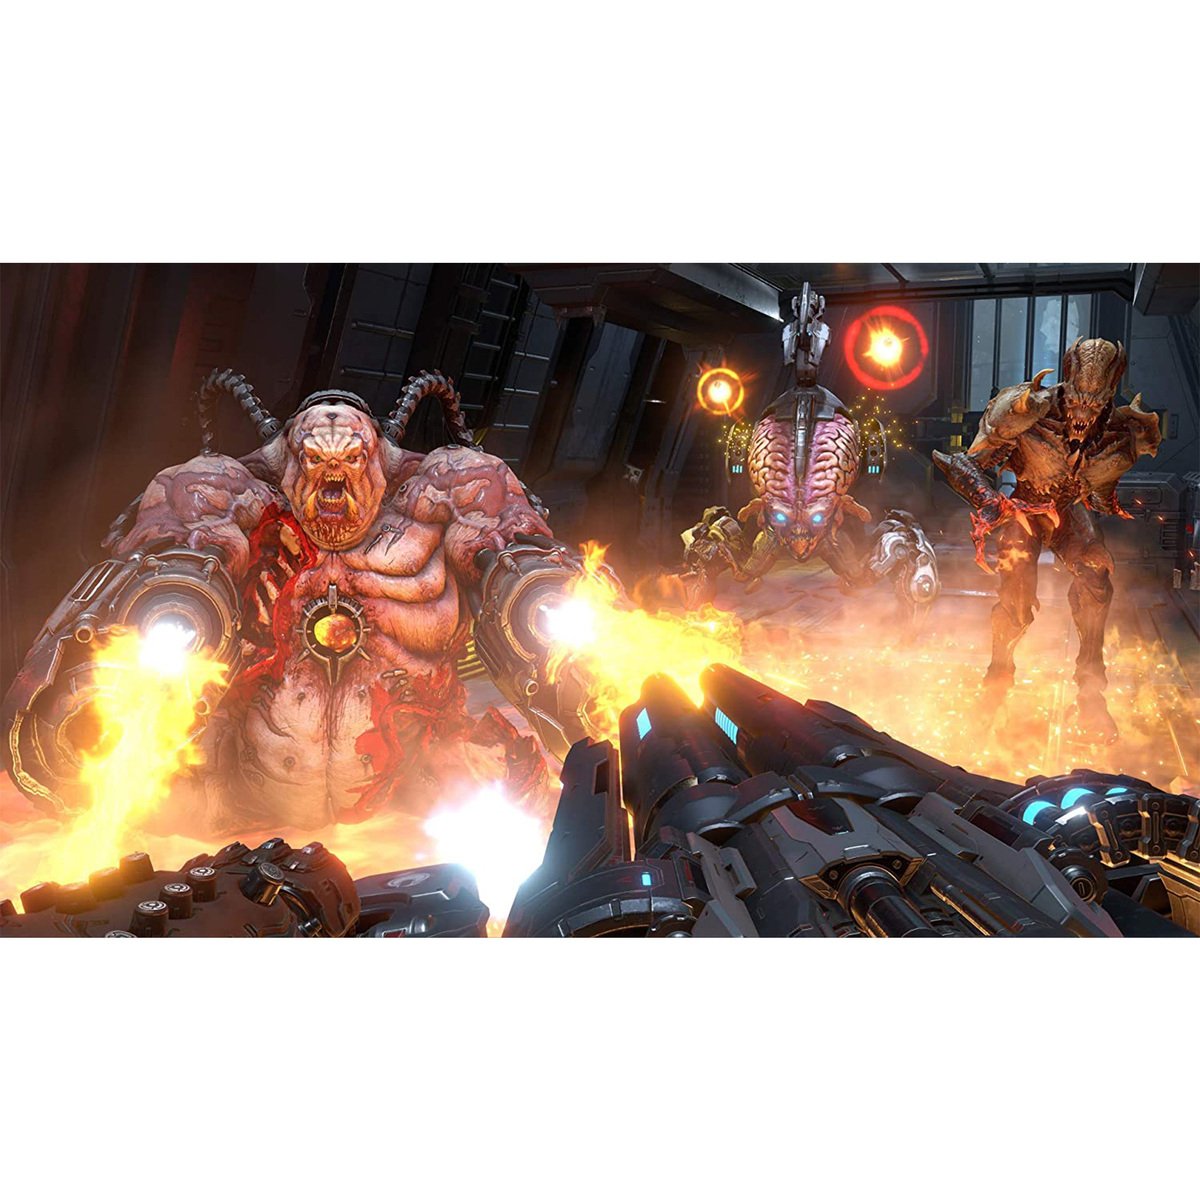 Doom Eternal Standard Edition (PS4)